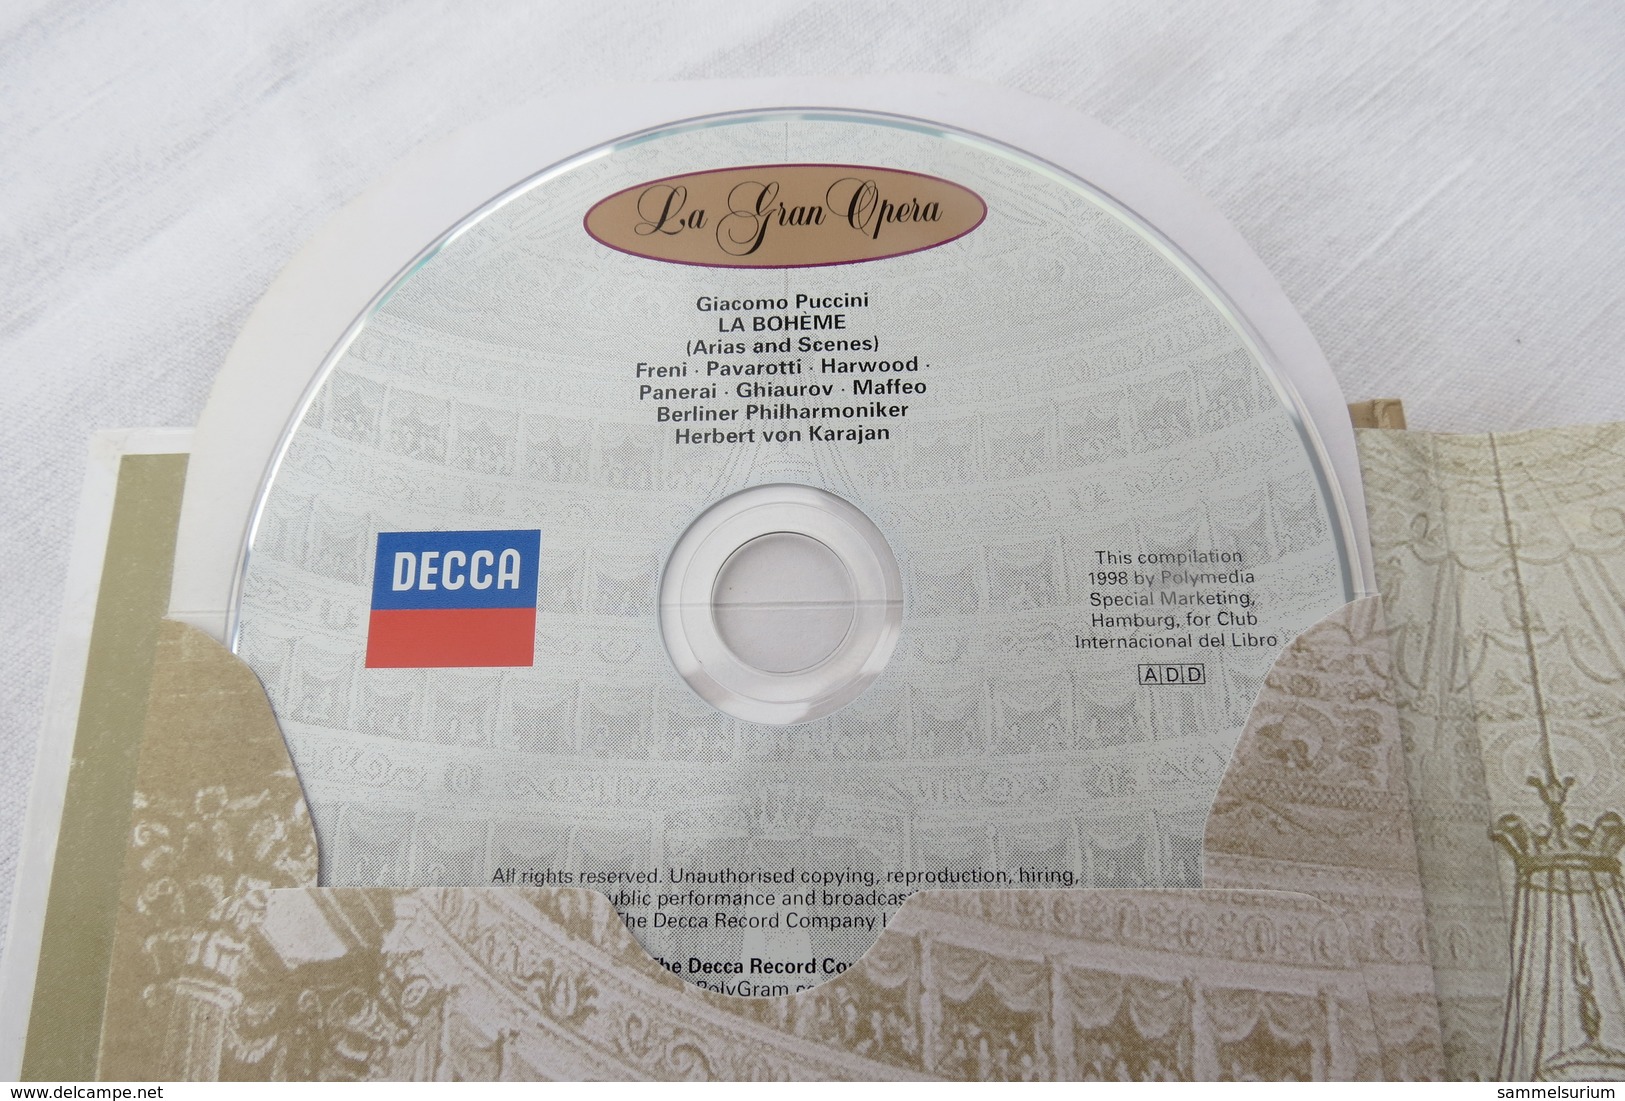 CD "La Bohème / Giacomo Puccini" Mit Buch Aus Der CD Book Collection (gepflegter Zustand) - Opere